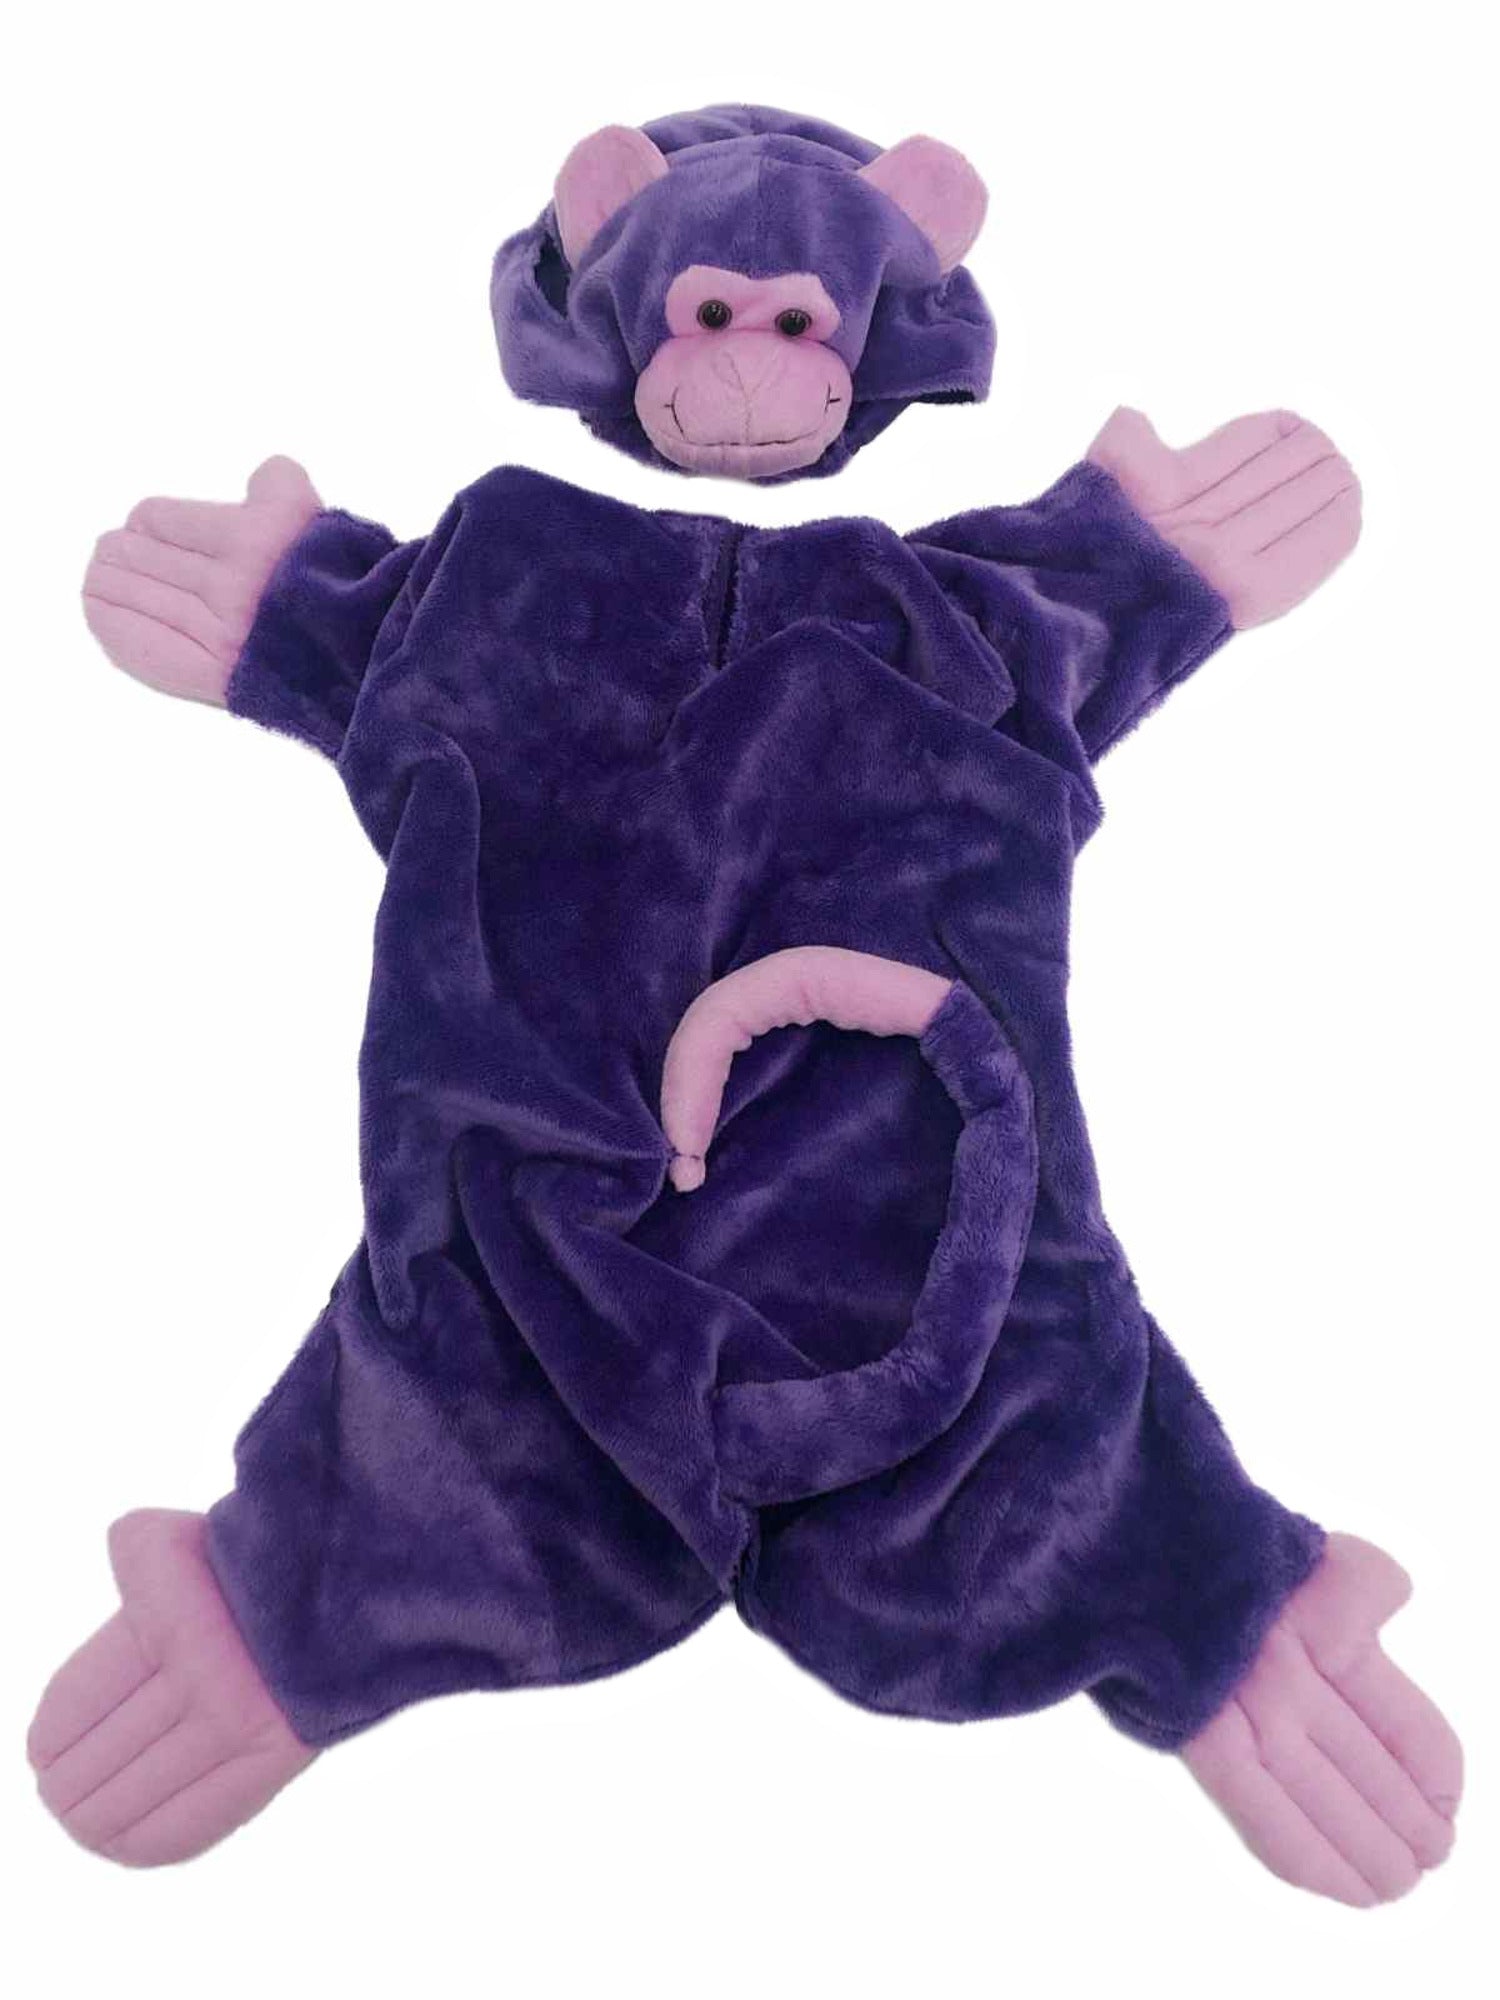 Dog Purple Monkey Pet Costume Outfit Apparel Body Head Piece Medium M